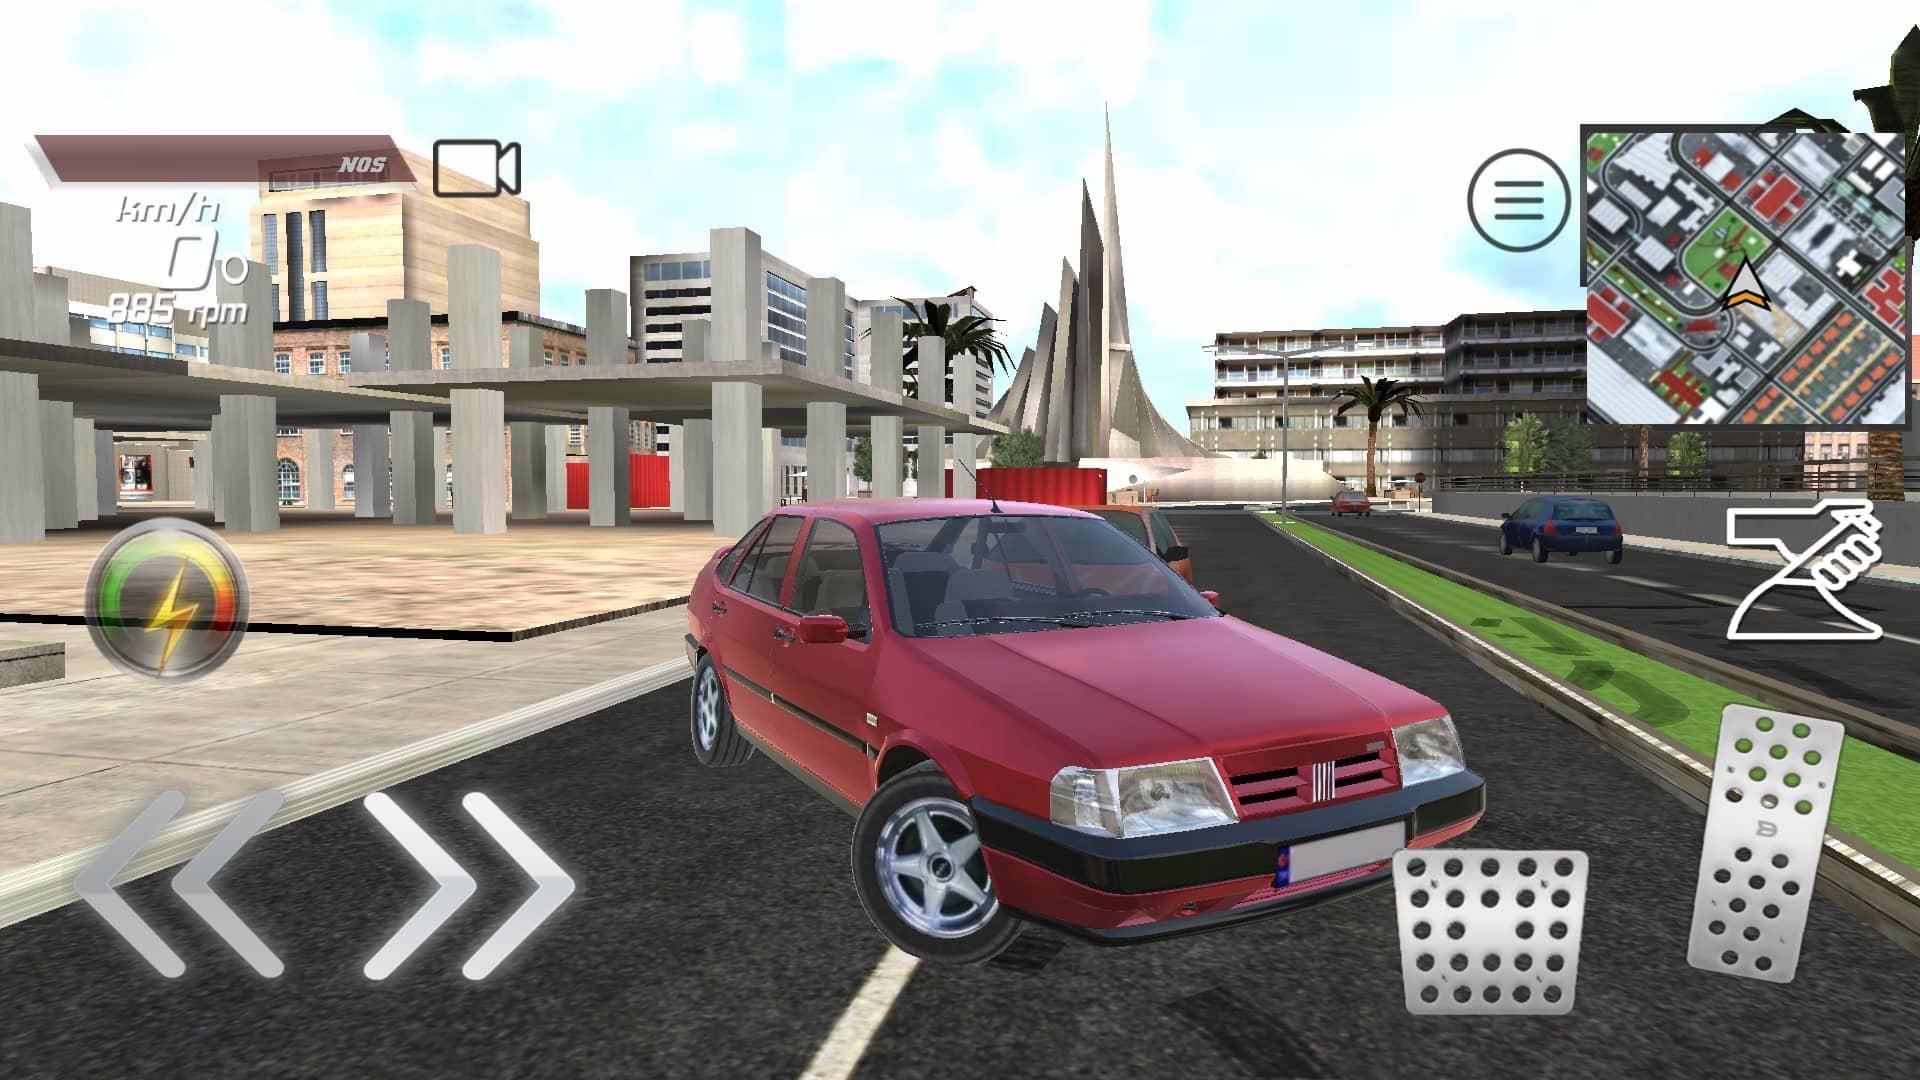 Tempra - City Simulation, Quests and Parking 1.7 Screenshot 14